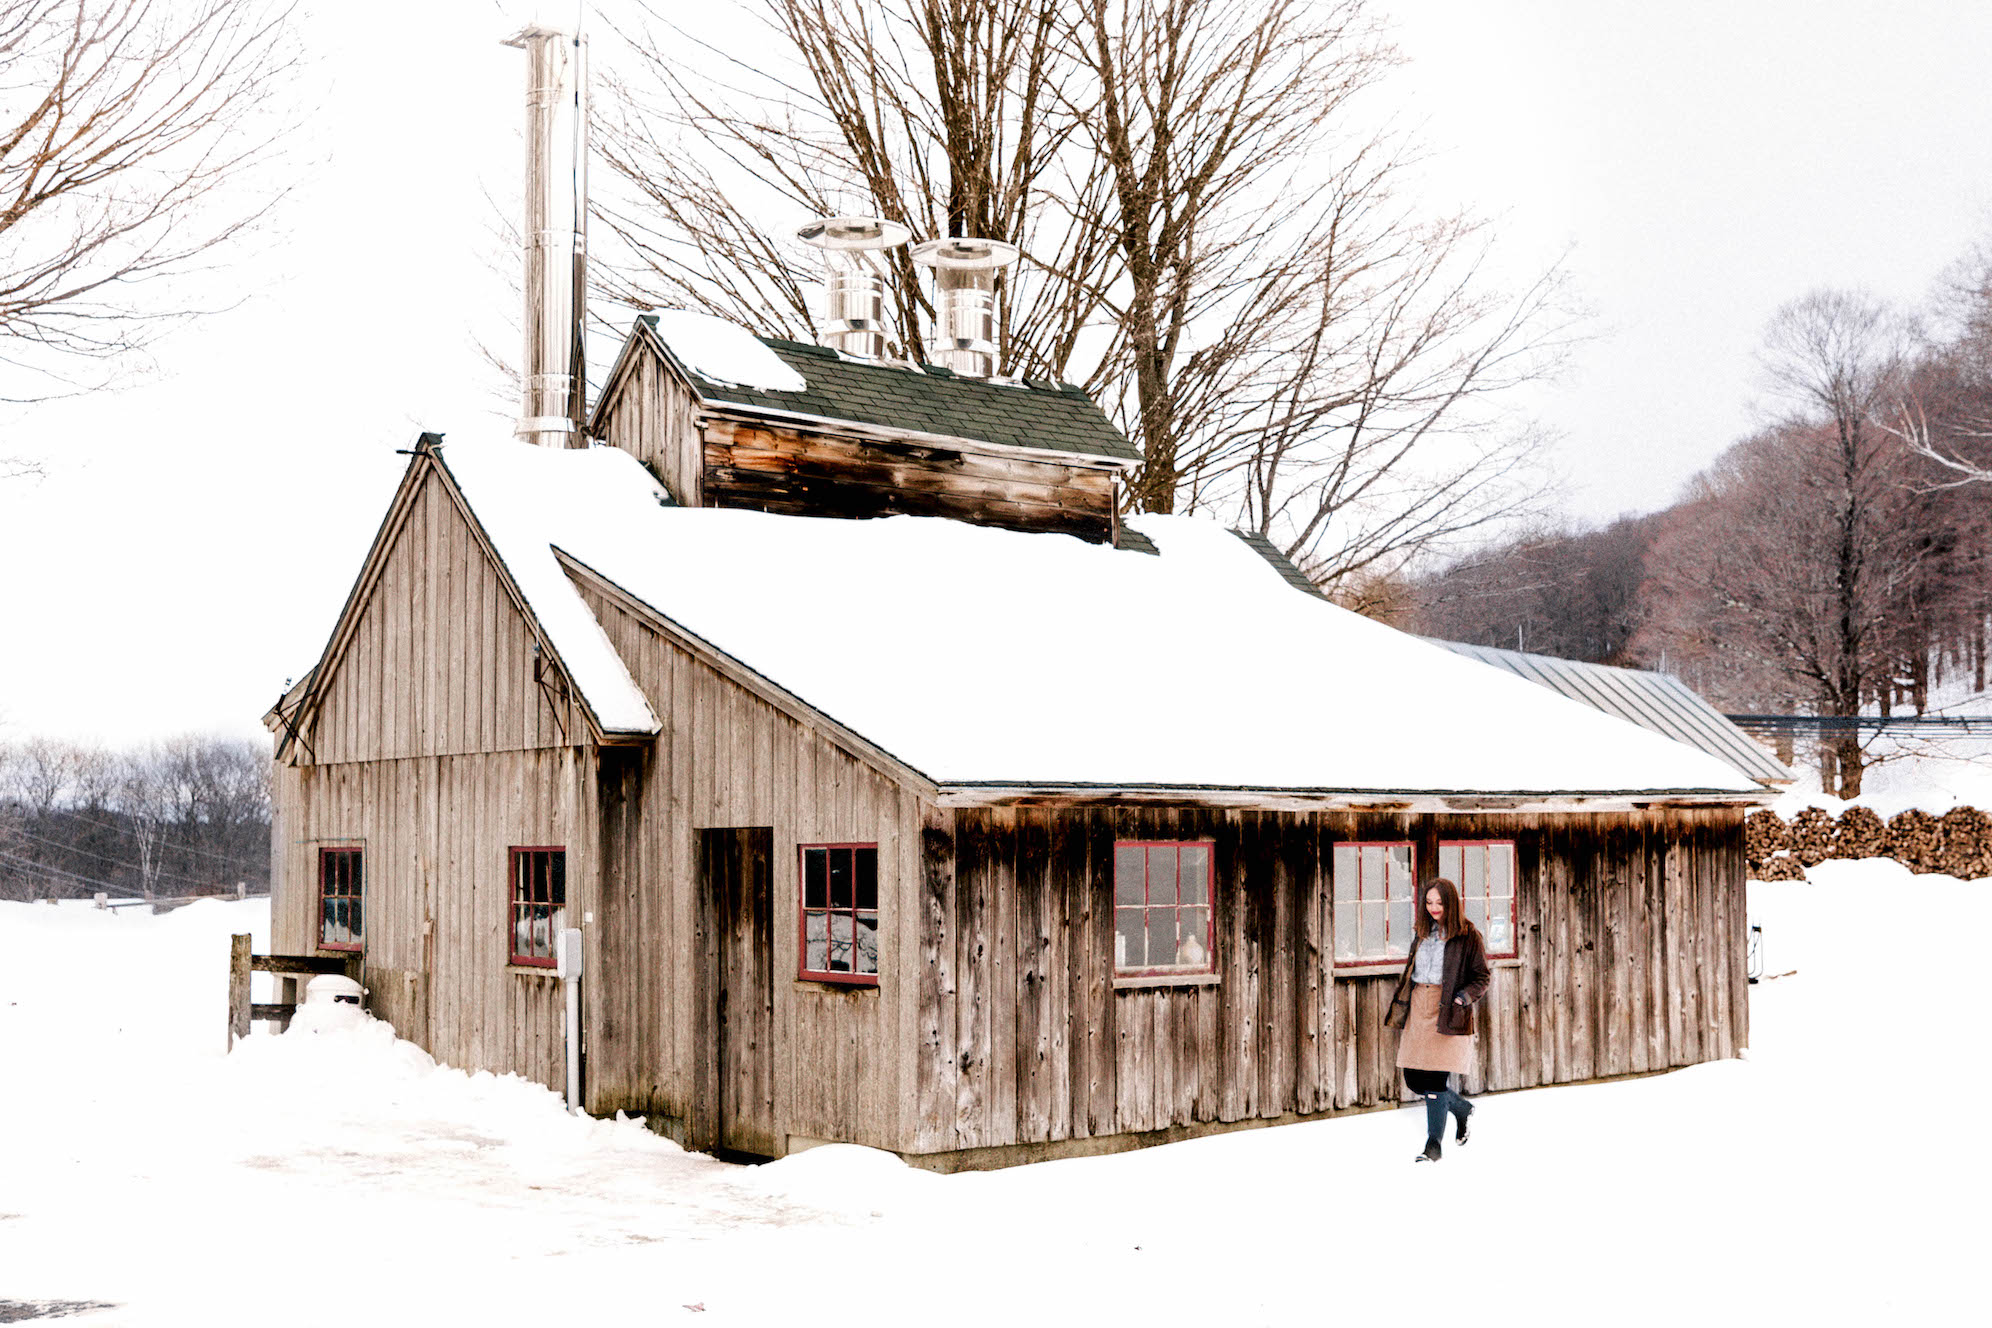 Explore Maple Season in Vermont at Richardson Dairy Farm